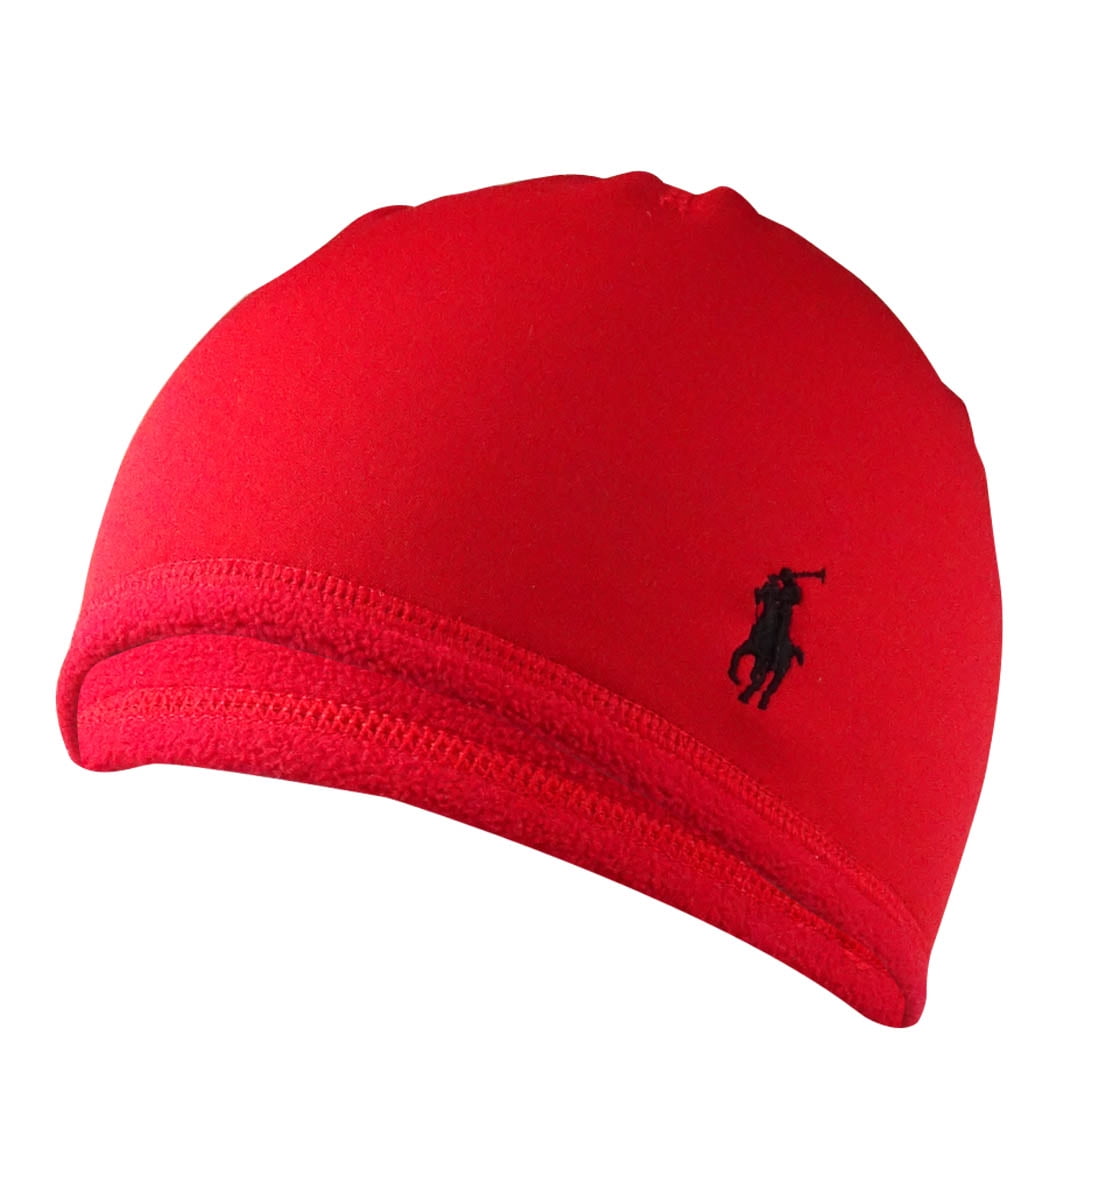 red polo skull cap